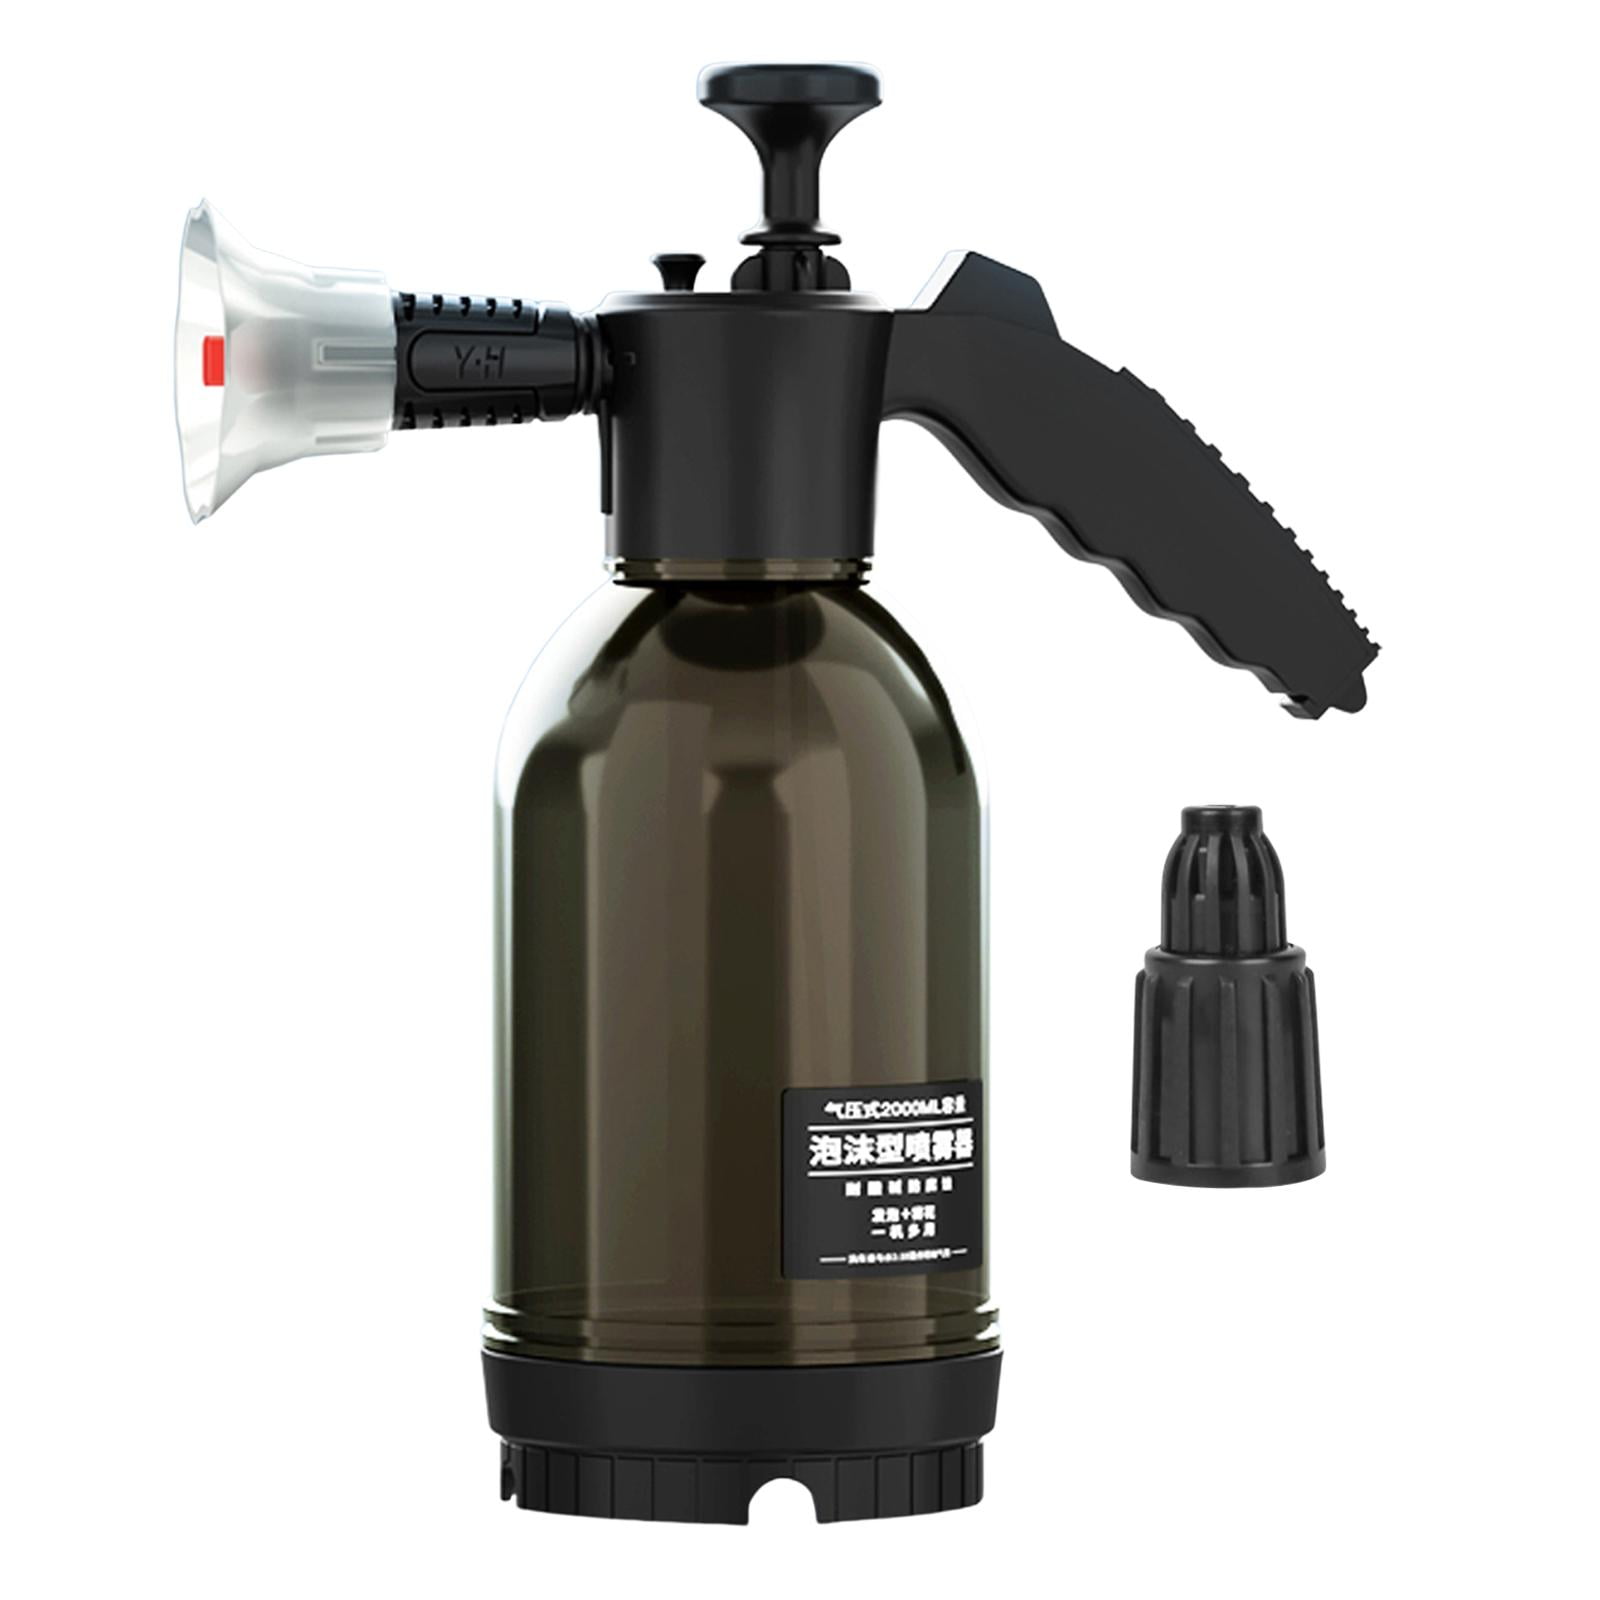 Carevas Foam Sprayer, Foaming Pump Hand Pressure Snow Foam Sprayer Water  Sprayer 2L with Two Nozzle 